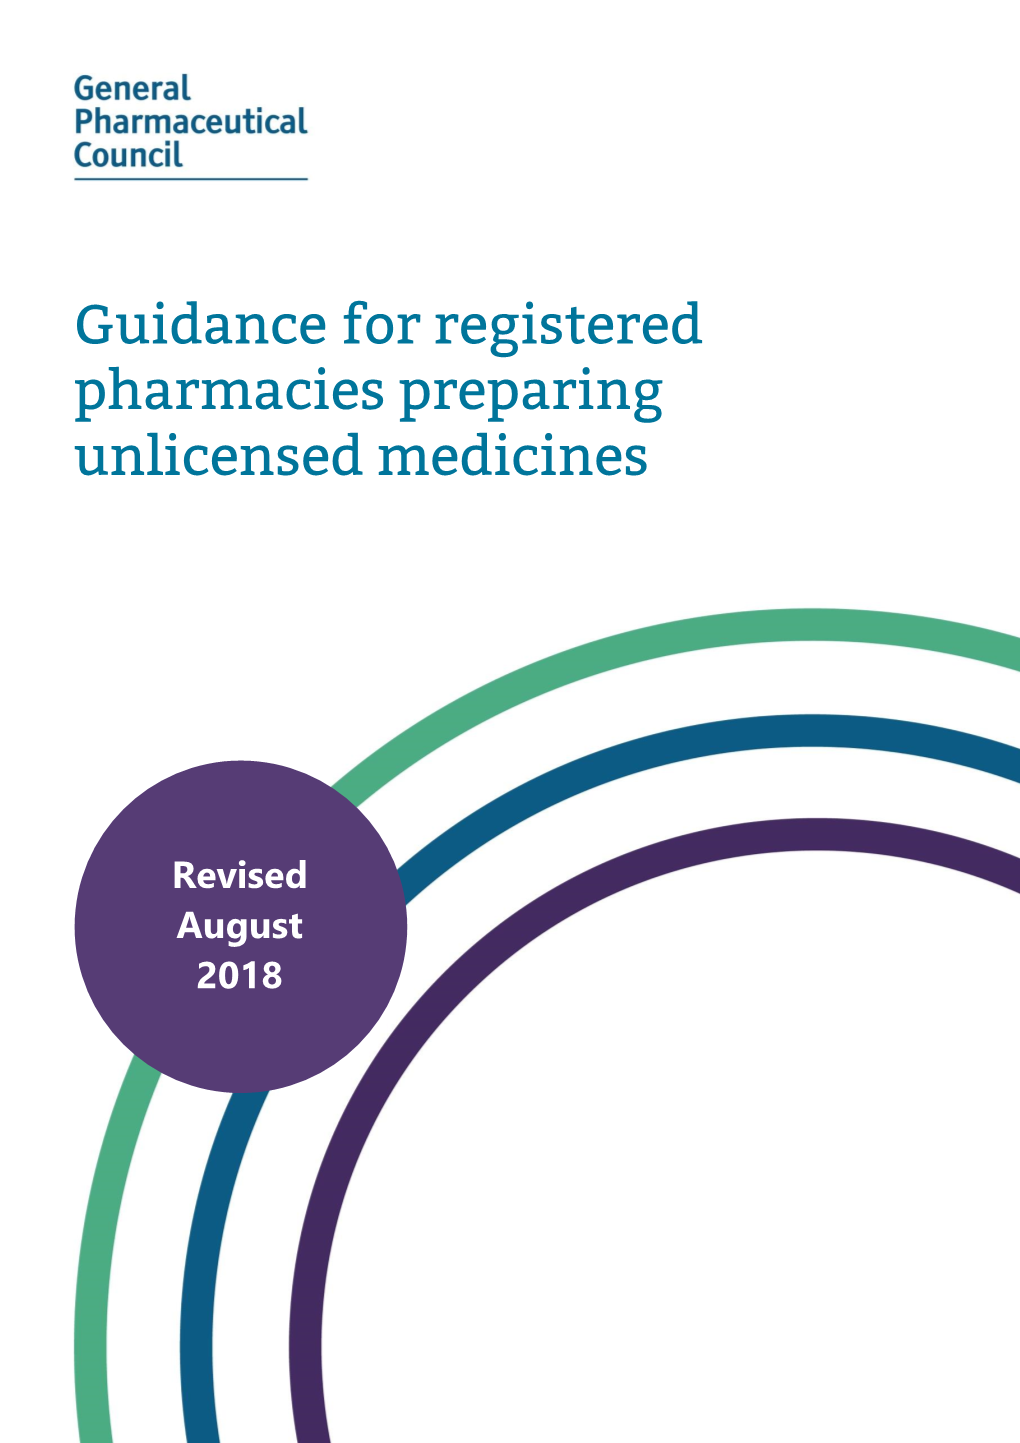 Guidance for Registered Pharmacies Preparing Unlicensed Medicines